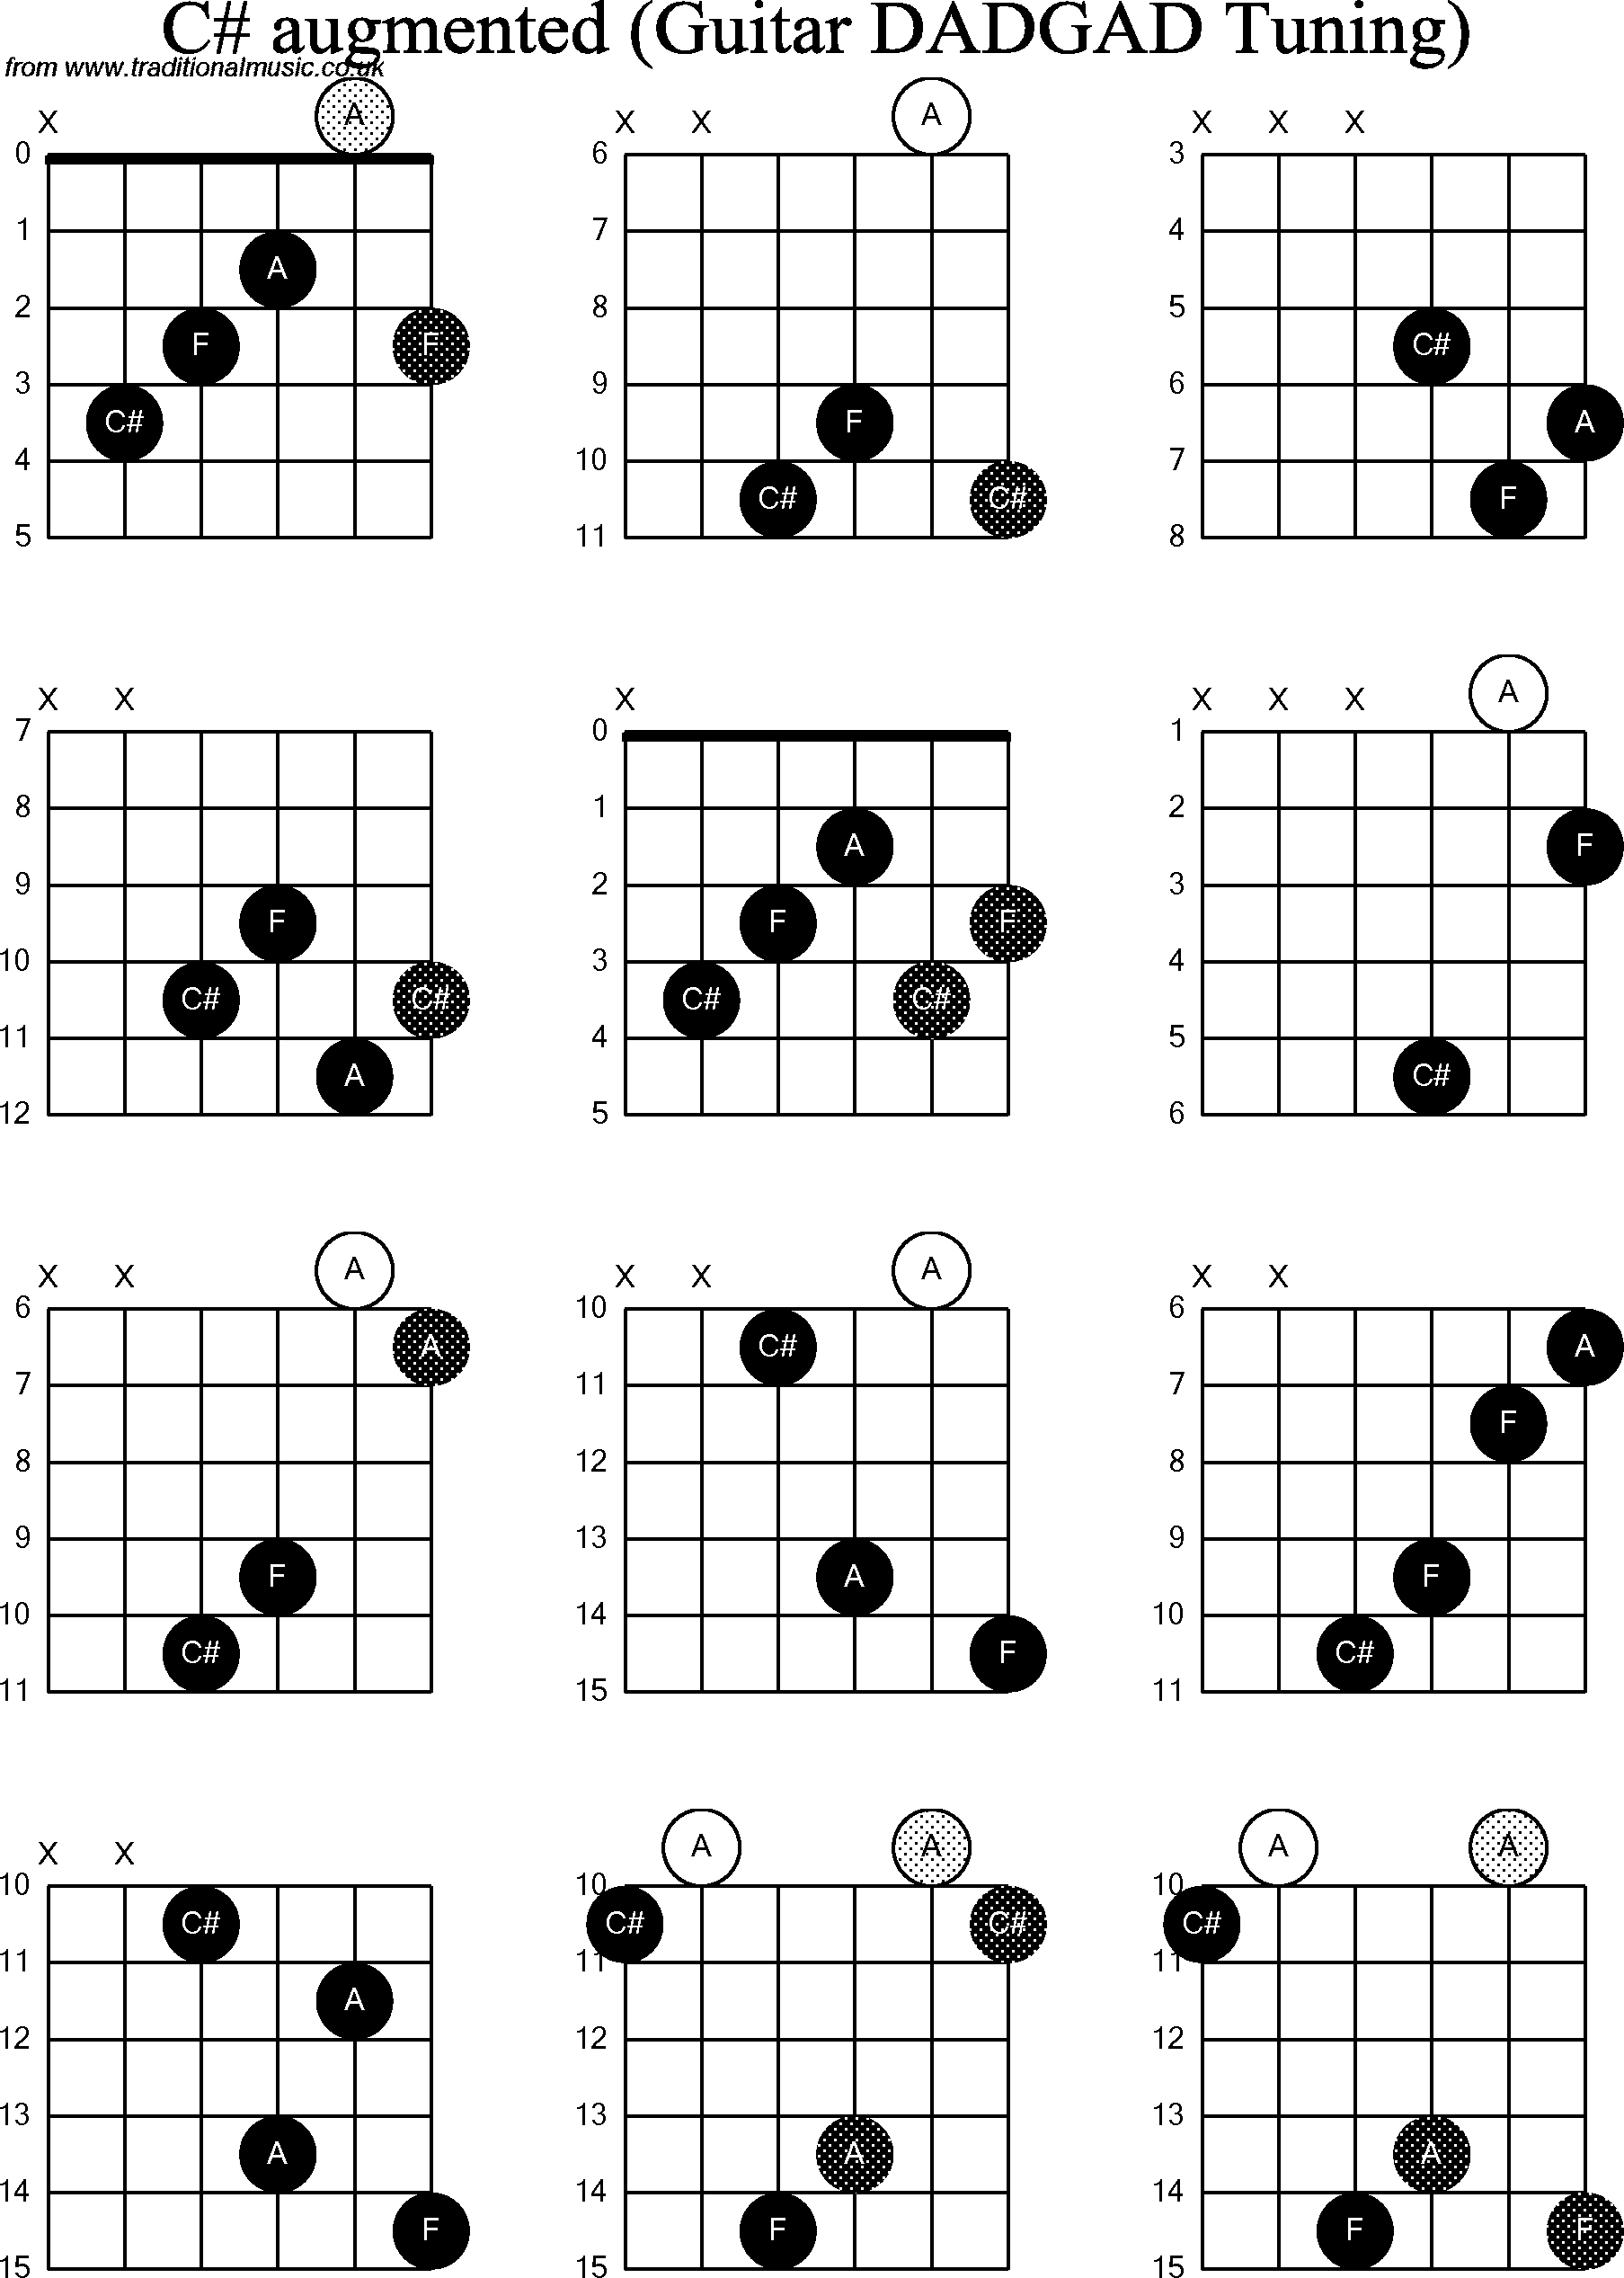 Chord Diagrams for D Modal Guitar(DADGAD), C Sharp Augmented